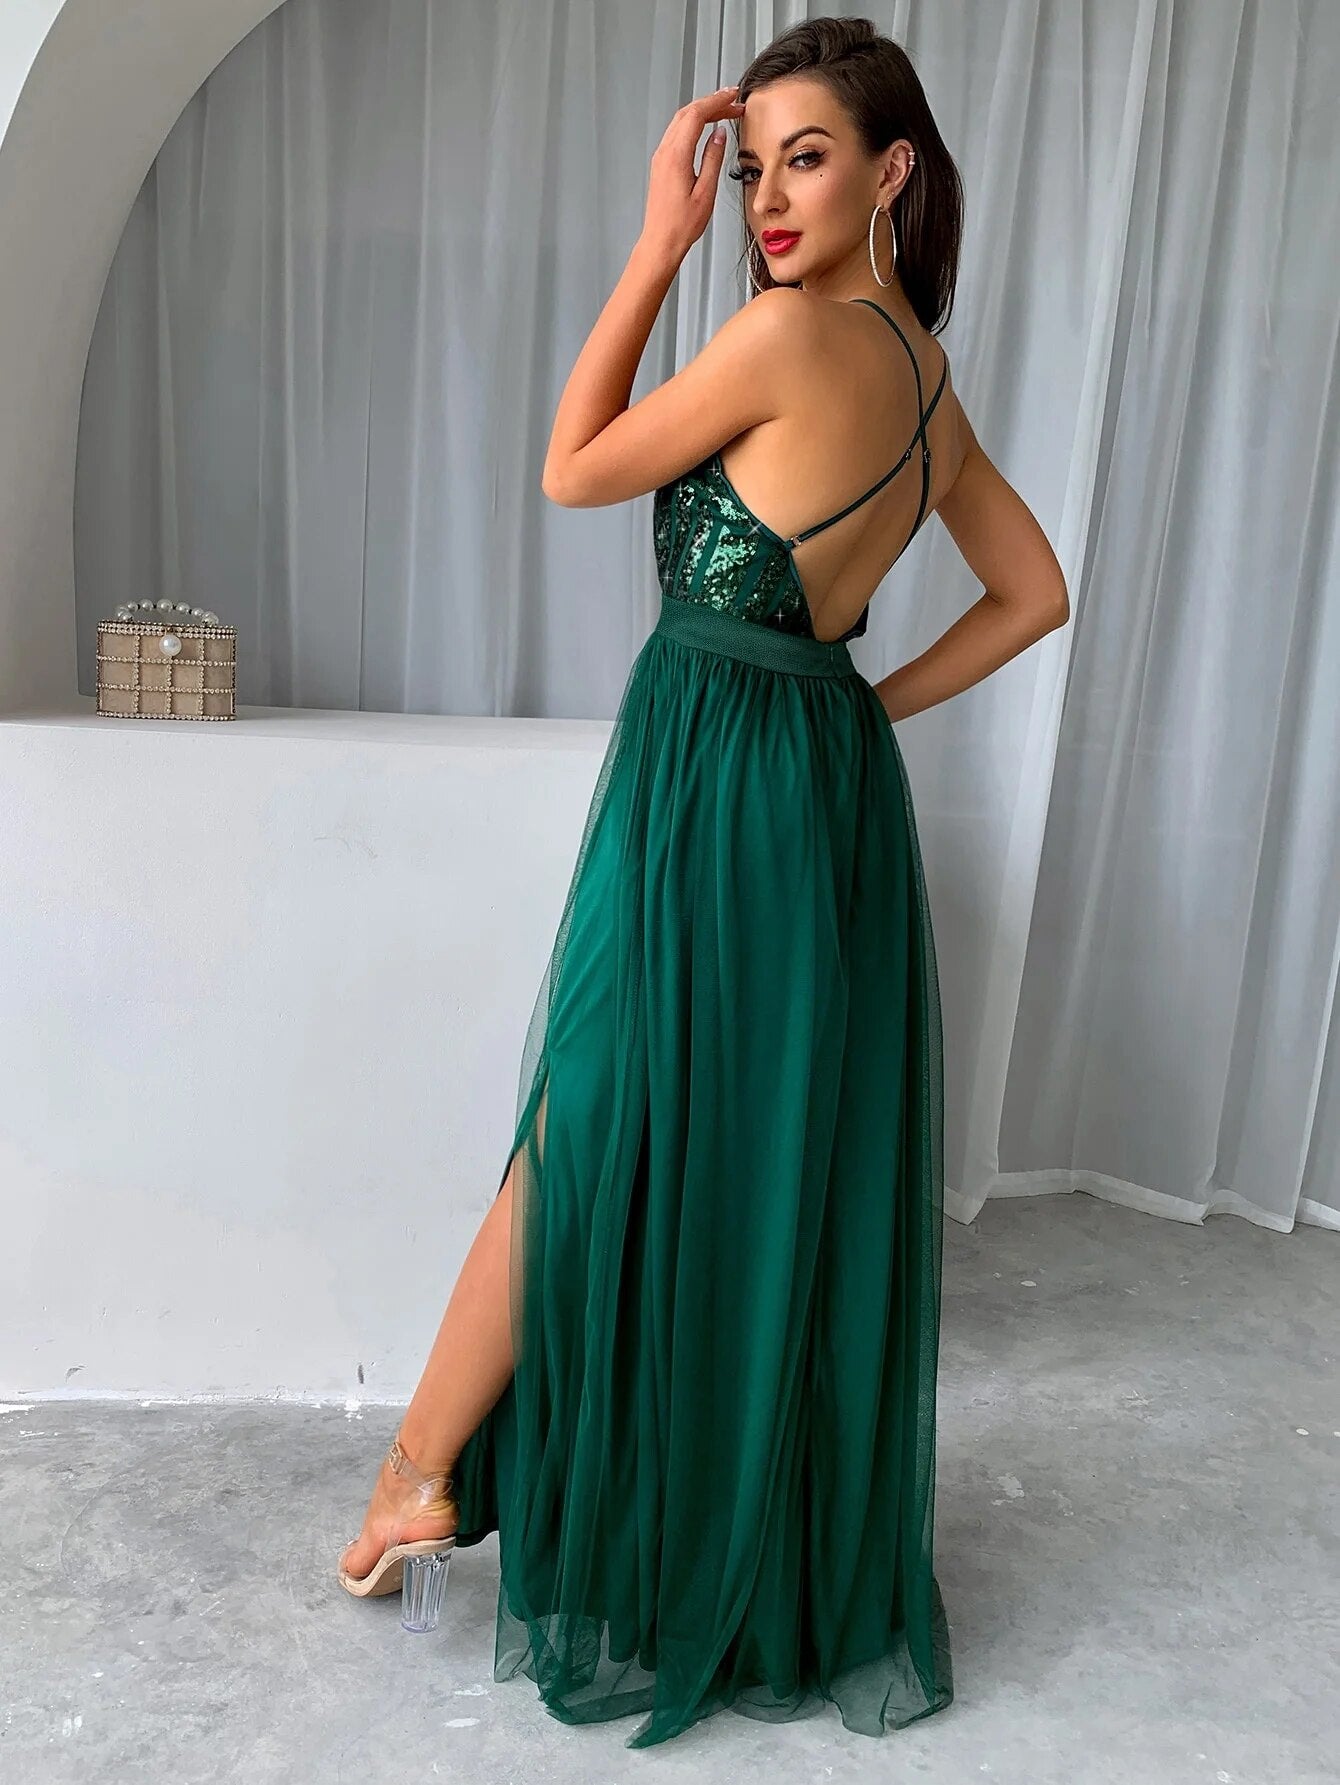 Mesh Sequin V-Neck Backless Cocktail Maxi Dress - Elegant Party Dress for Women